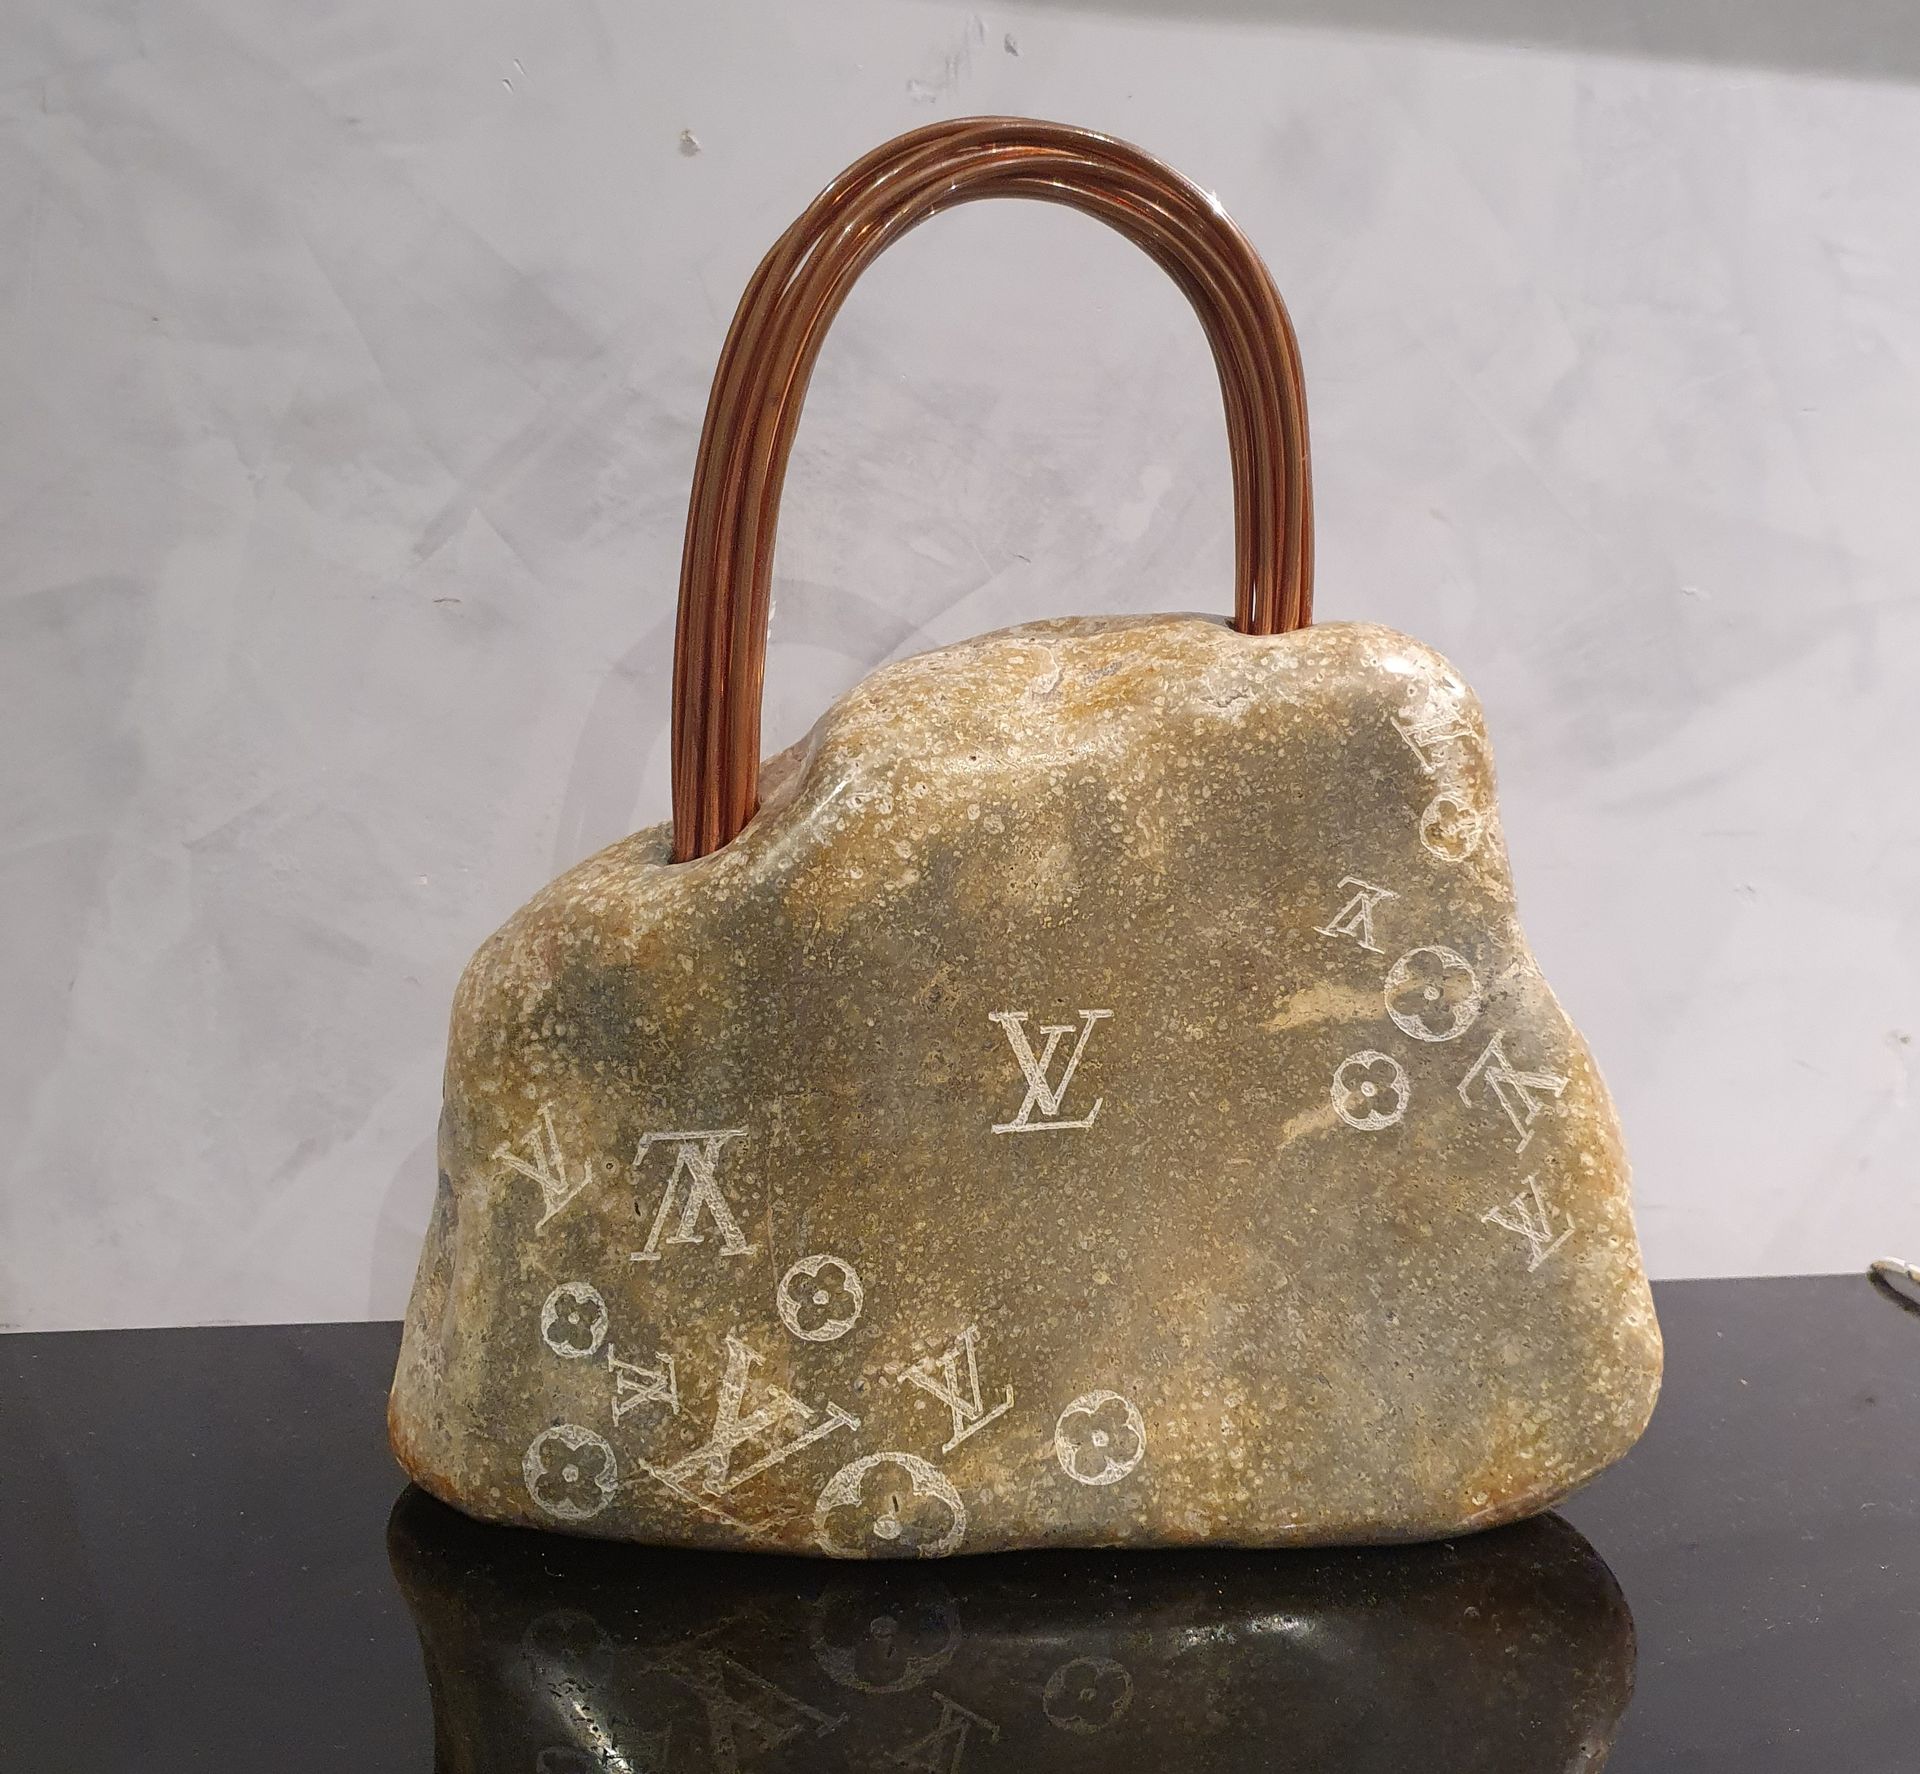 Null MUN-GI YANG (nacida en 1970)

Piedra de lujo-Louis Vuitton gris, 2014

Escu&hellip;